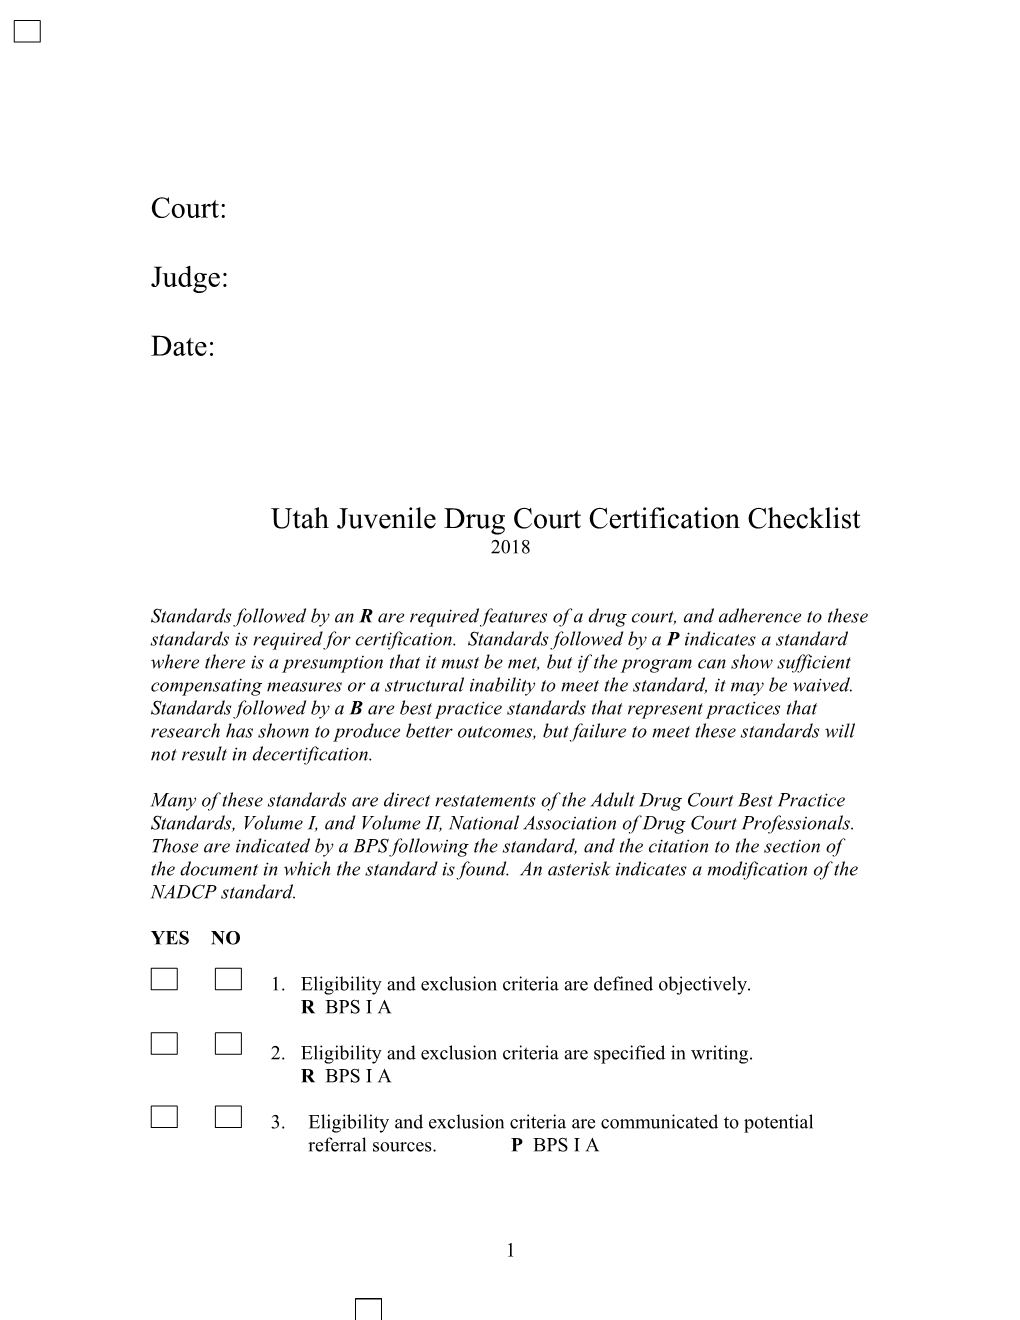 Utah Juvenile Drug Court Certification Checklist - 2018